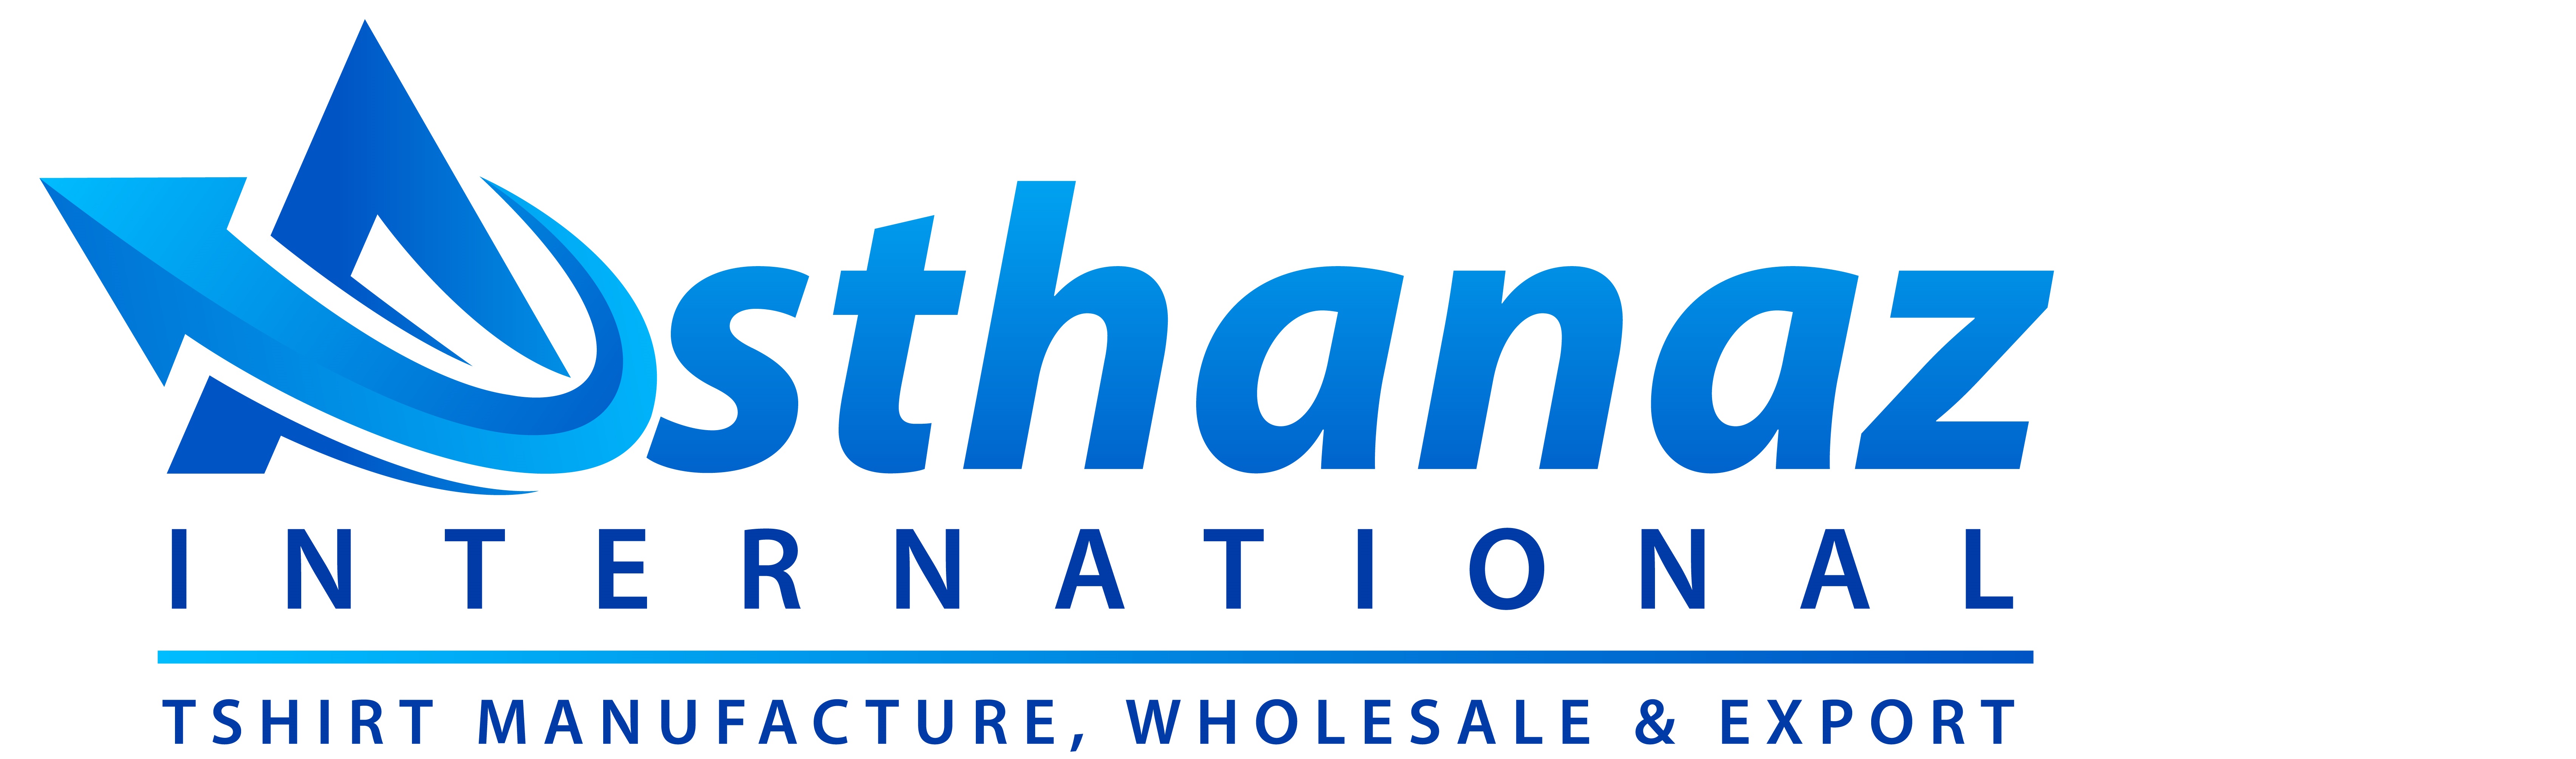 Asthanaz International - Tshirt Manufacturer